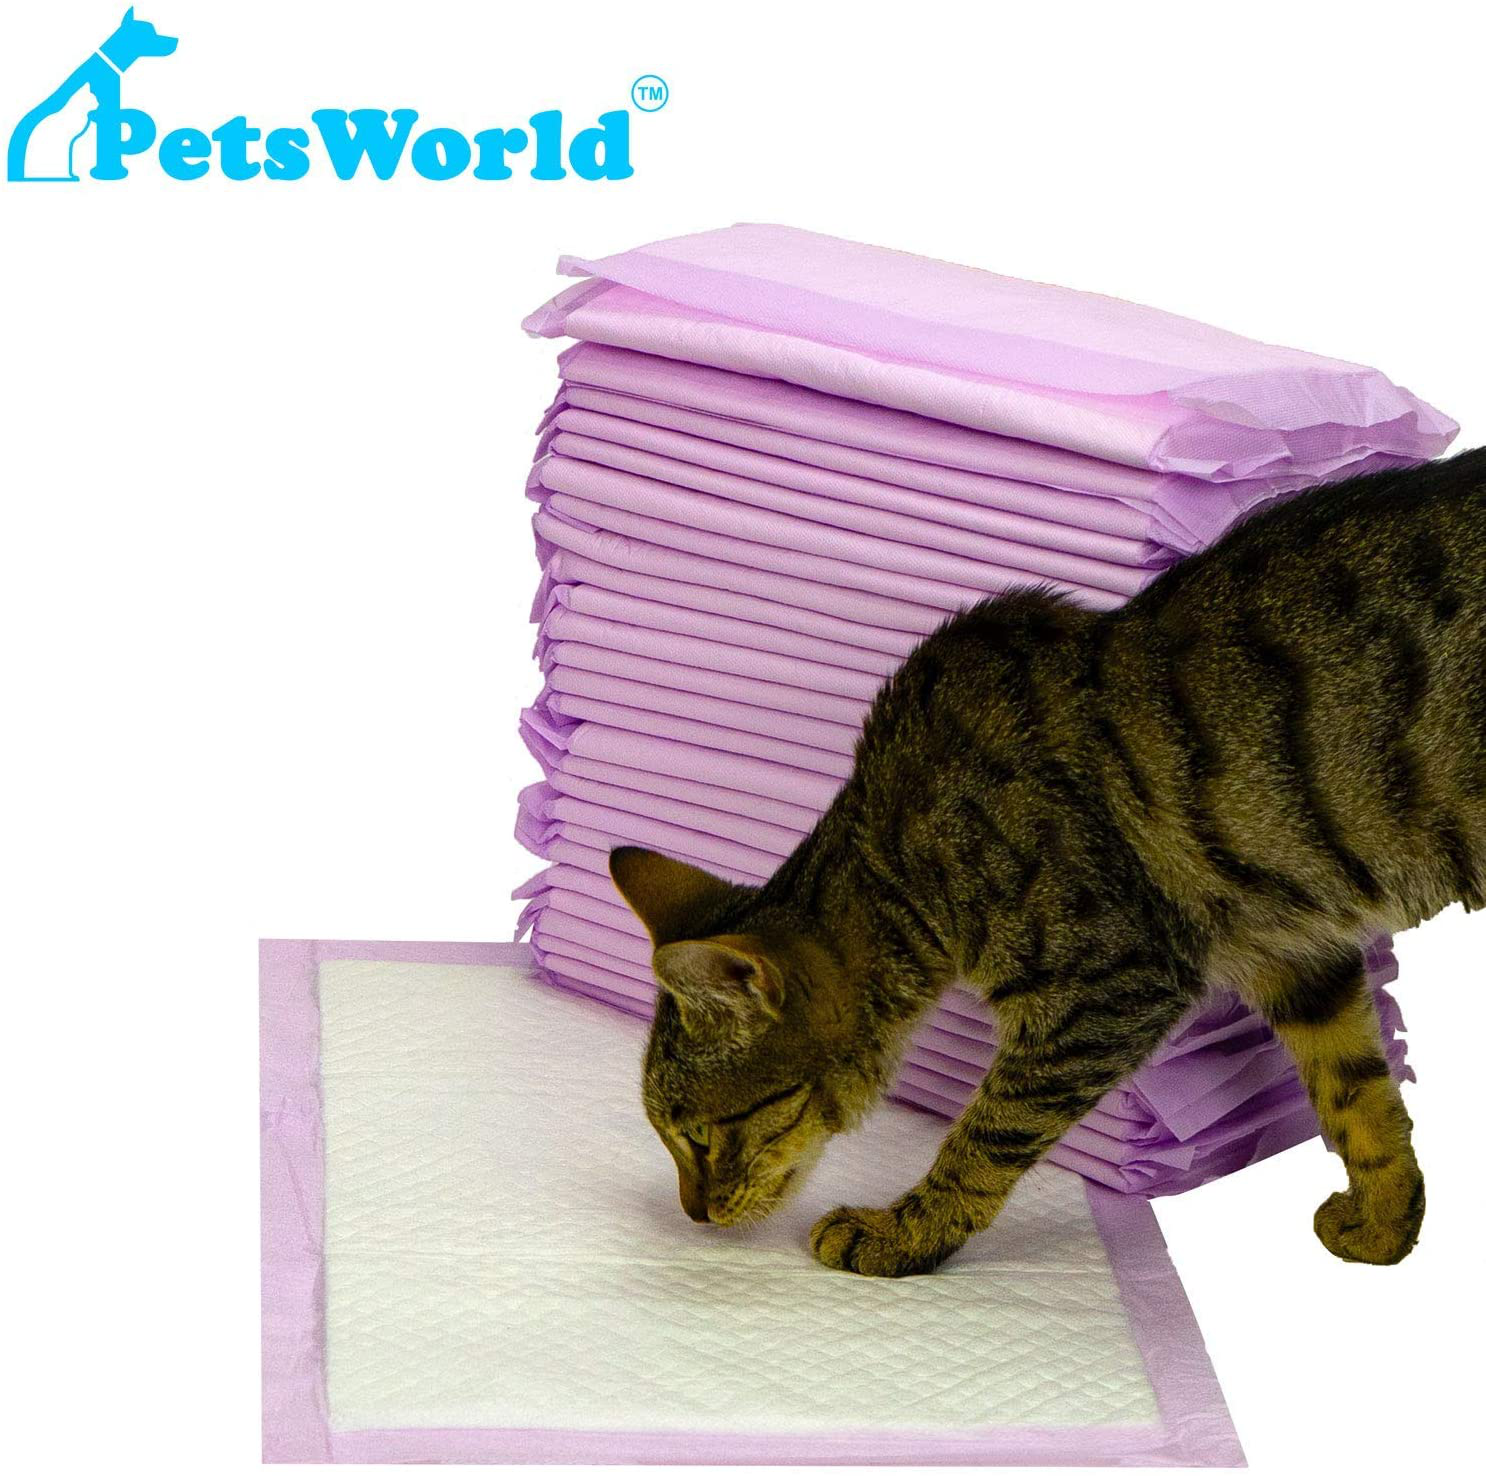 PETSWORLD Cat Pad Refills for Tidy Cats Breeze Litter System